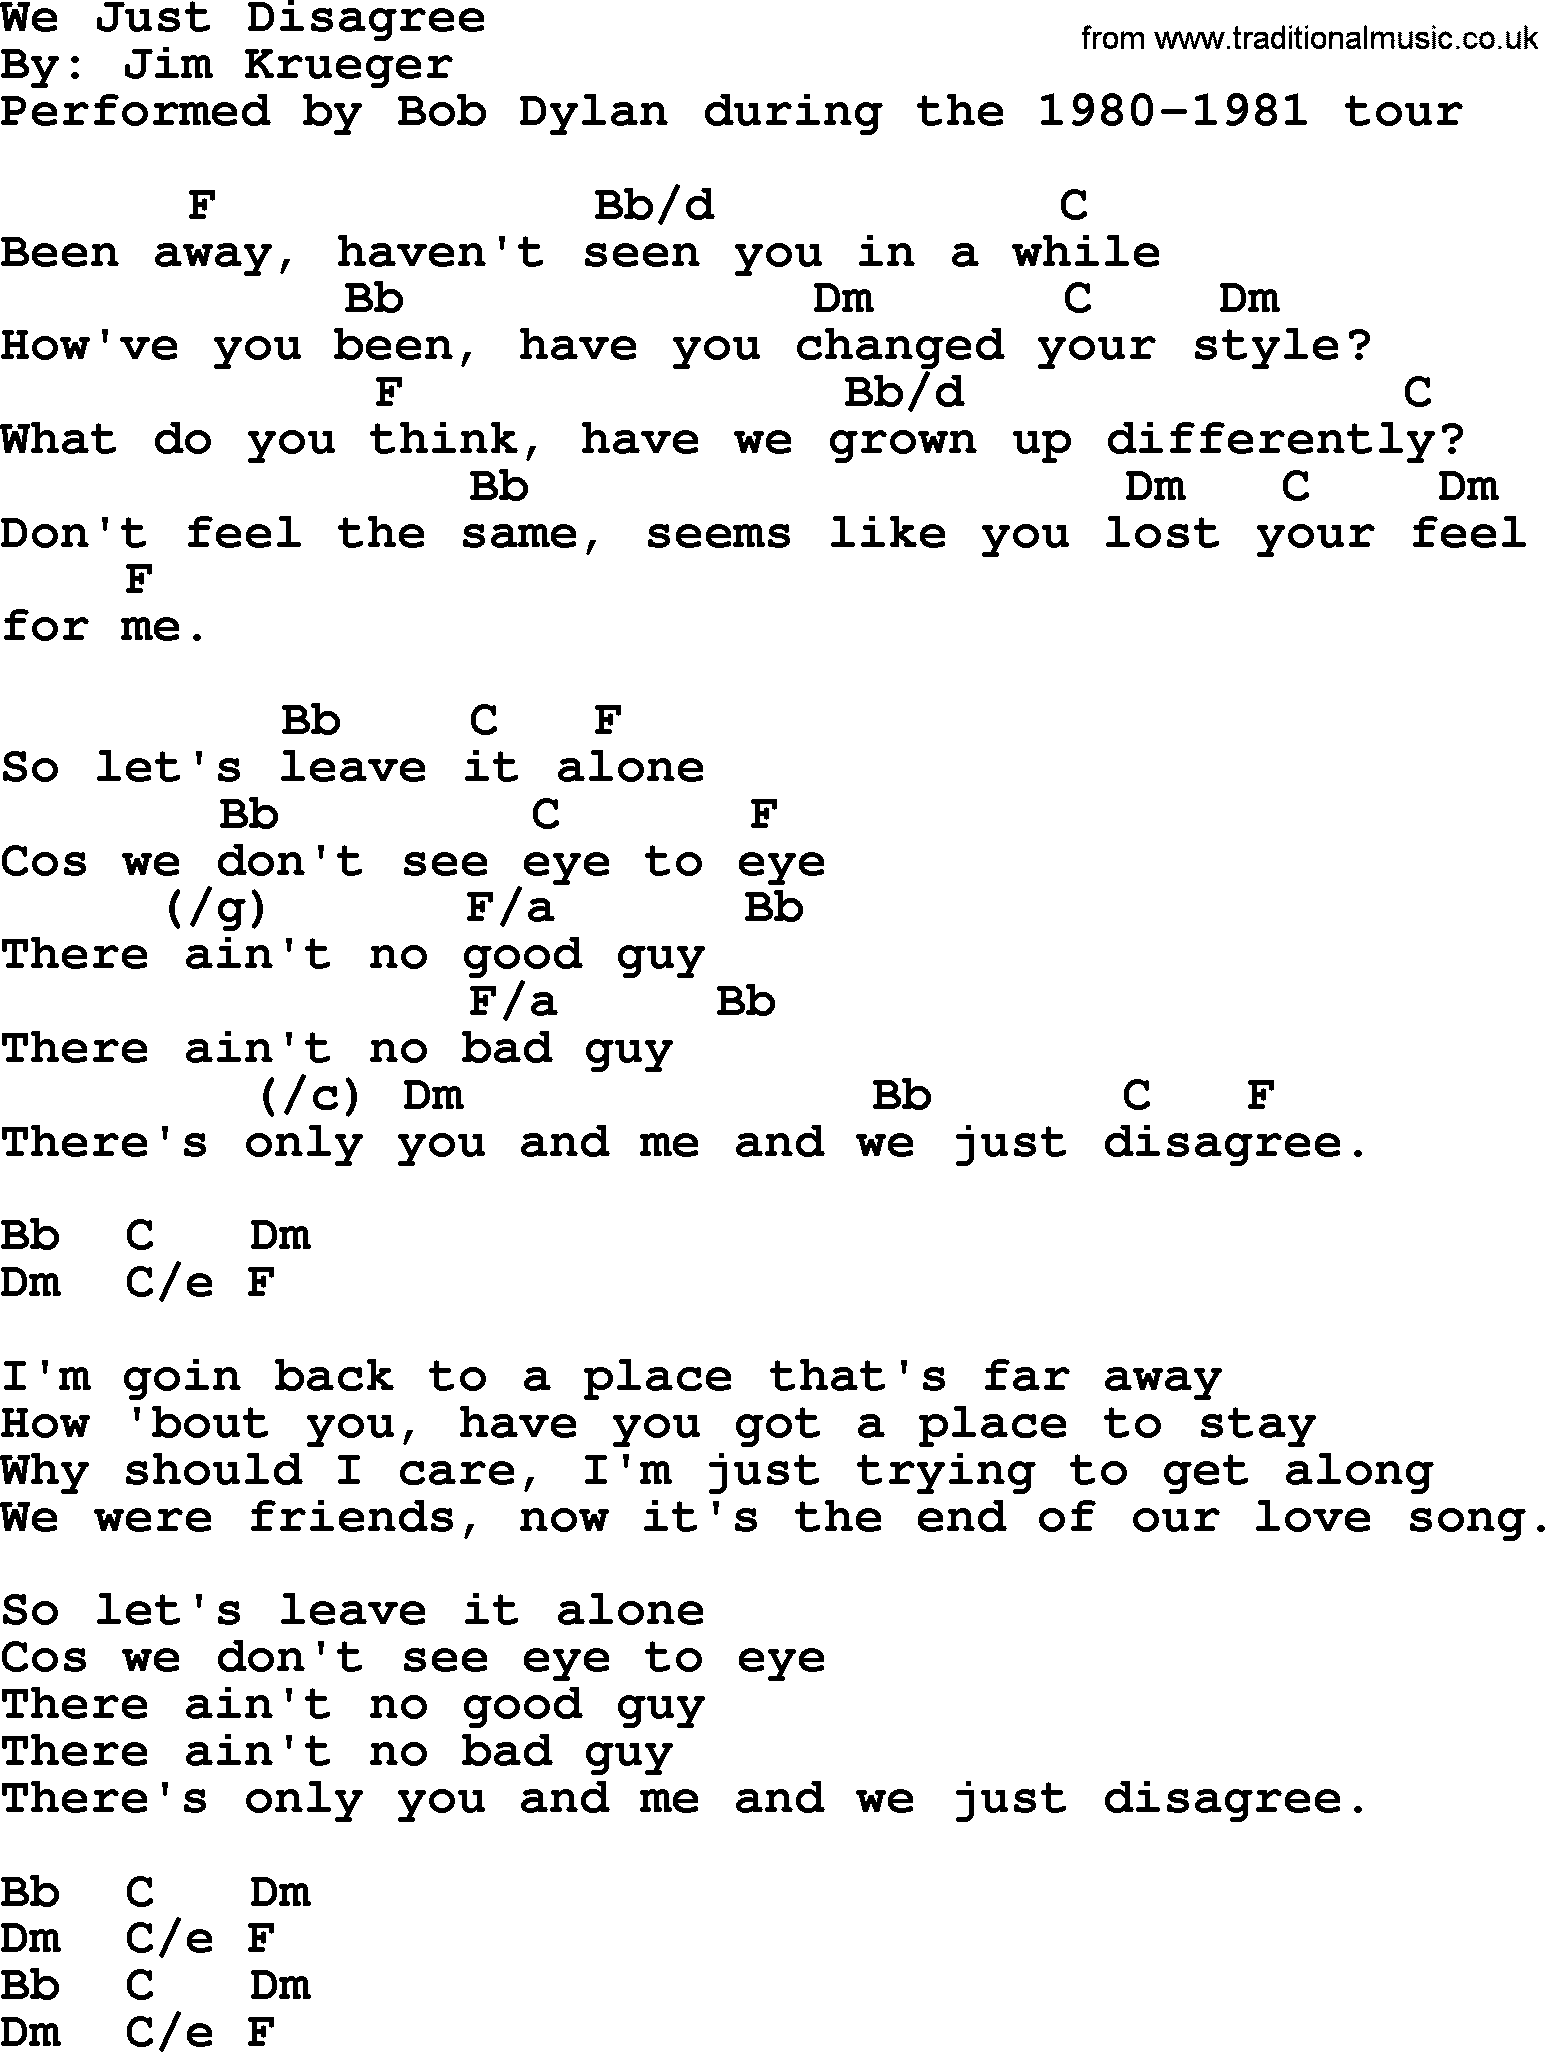 Bob Dylan song, lyrics with chords - We Just Disagree